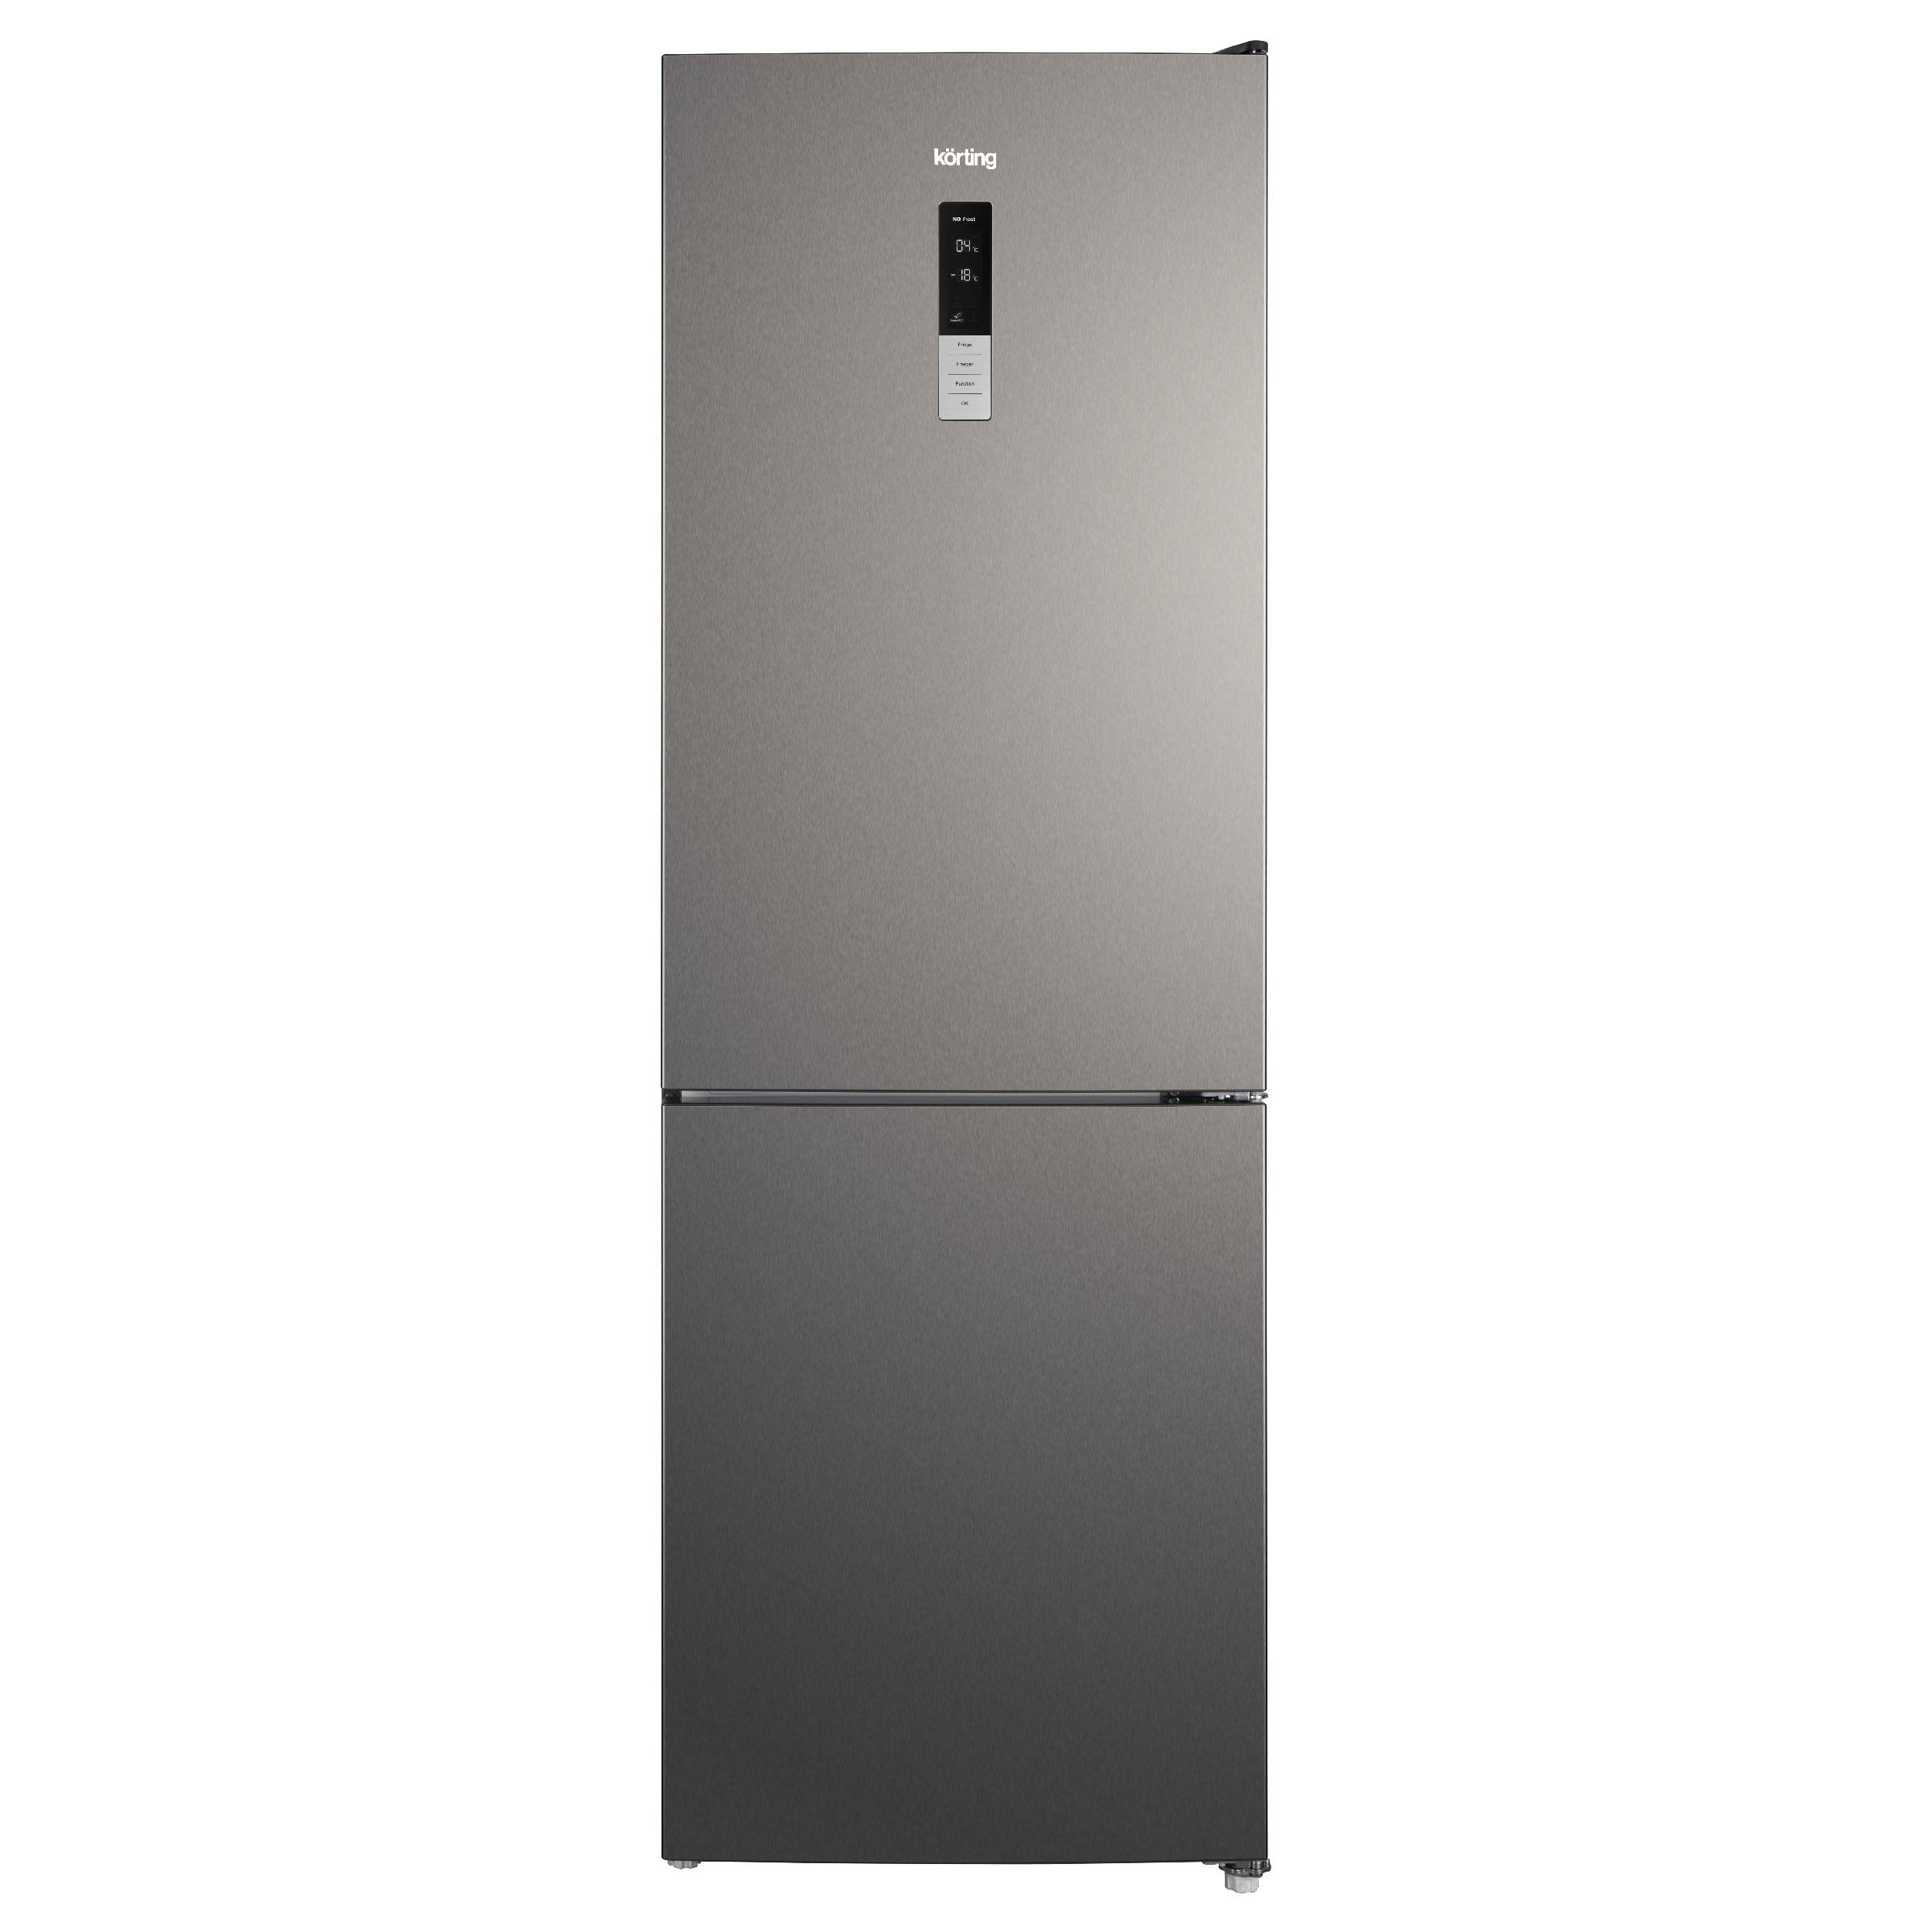 Холодильник Korting KNFC 61869 X серебристый, серый холодильник korting knfc 62017 x серебристый серый